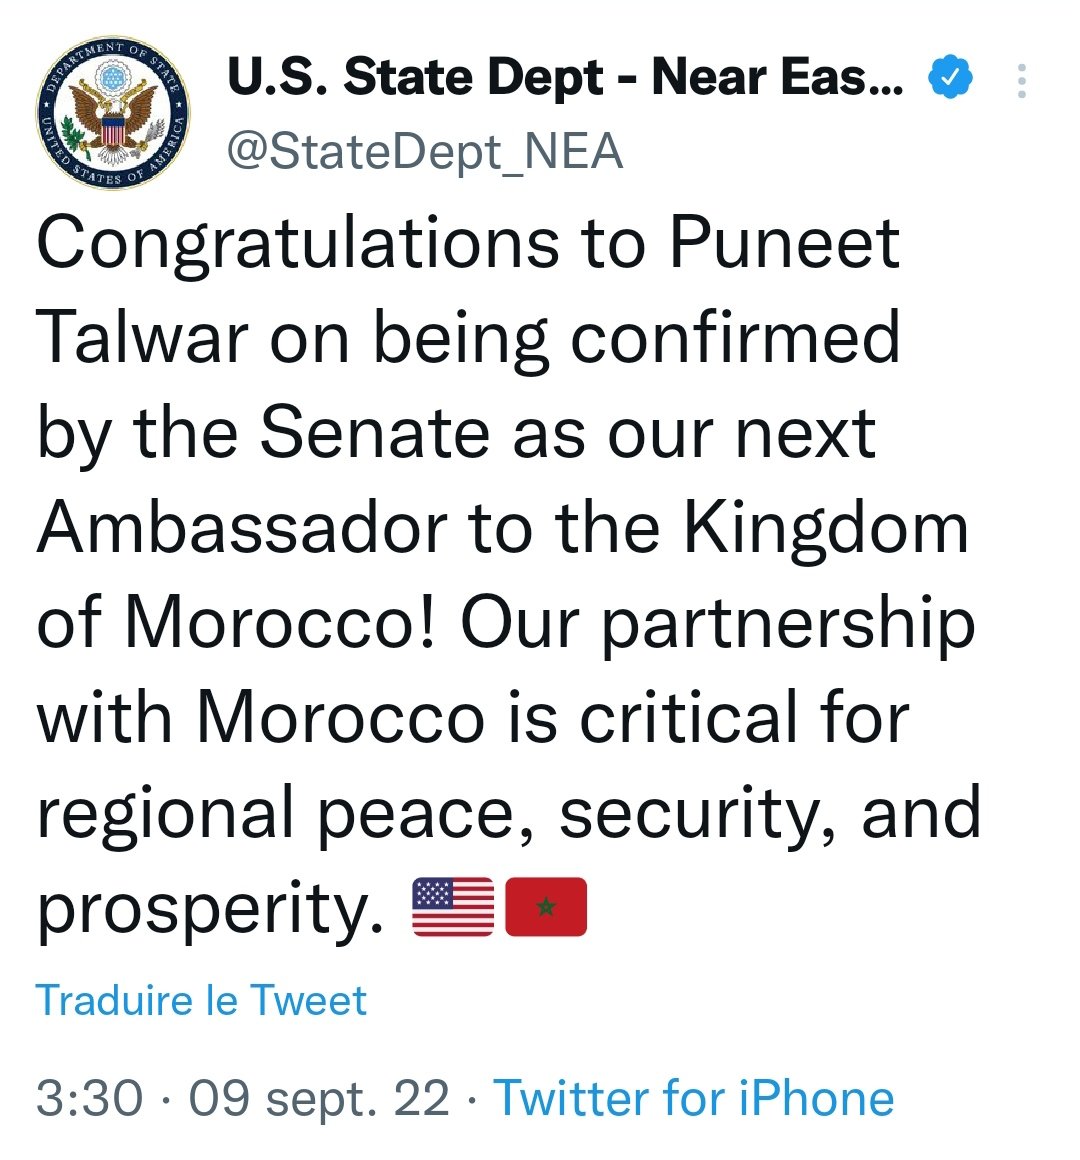 Le Sénat valide Puneet Talwa comme ambassadeur des Etats-Unis au Maroc